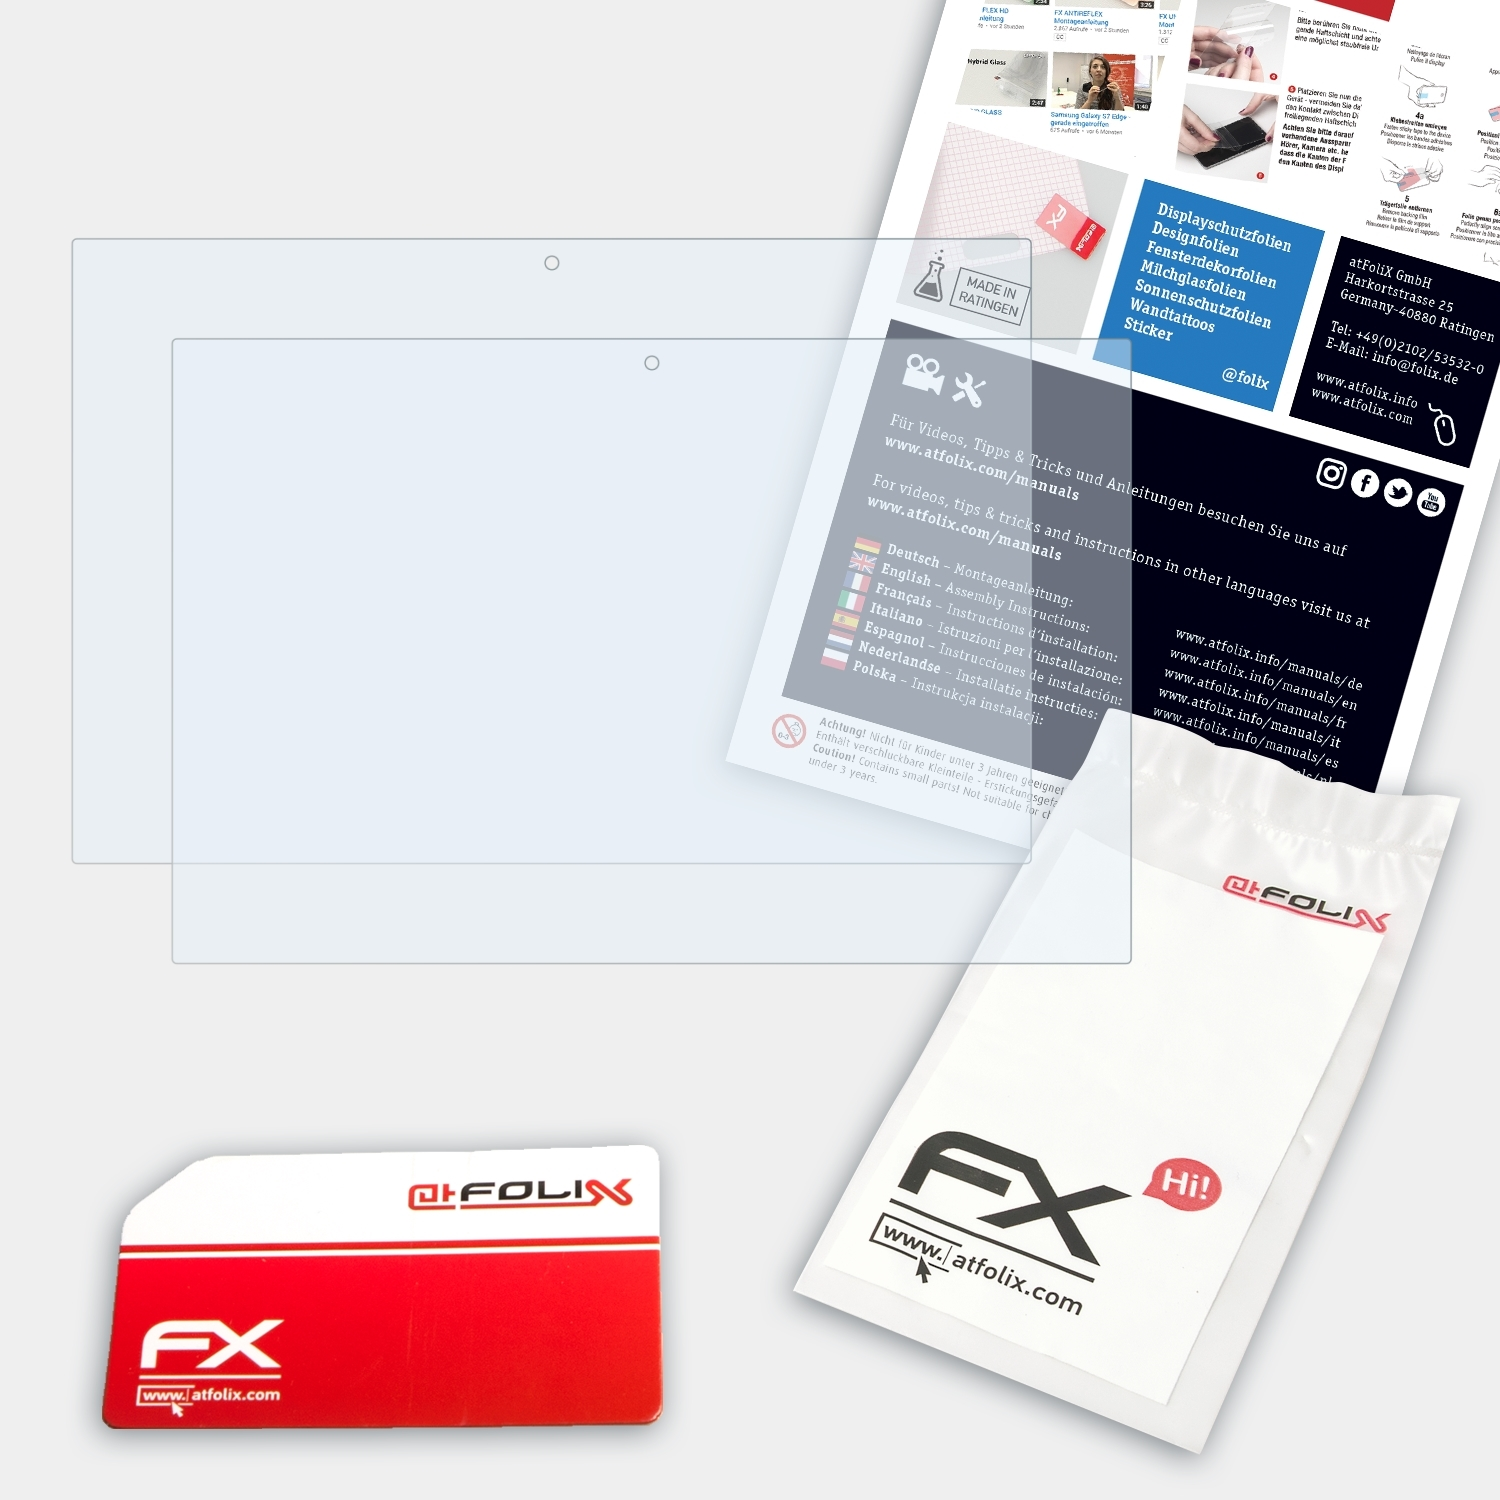 Displayschutz(für 260) ATFOLIX 2x ThinkPad FX-Clear Yoga Lenovo